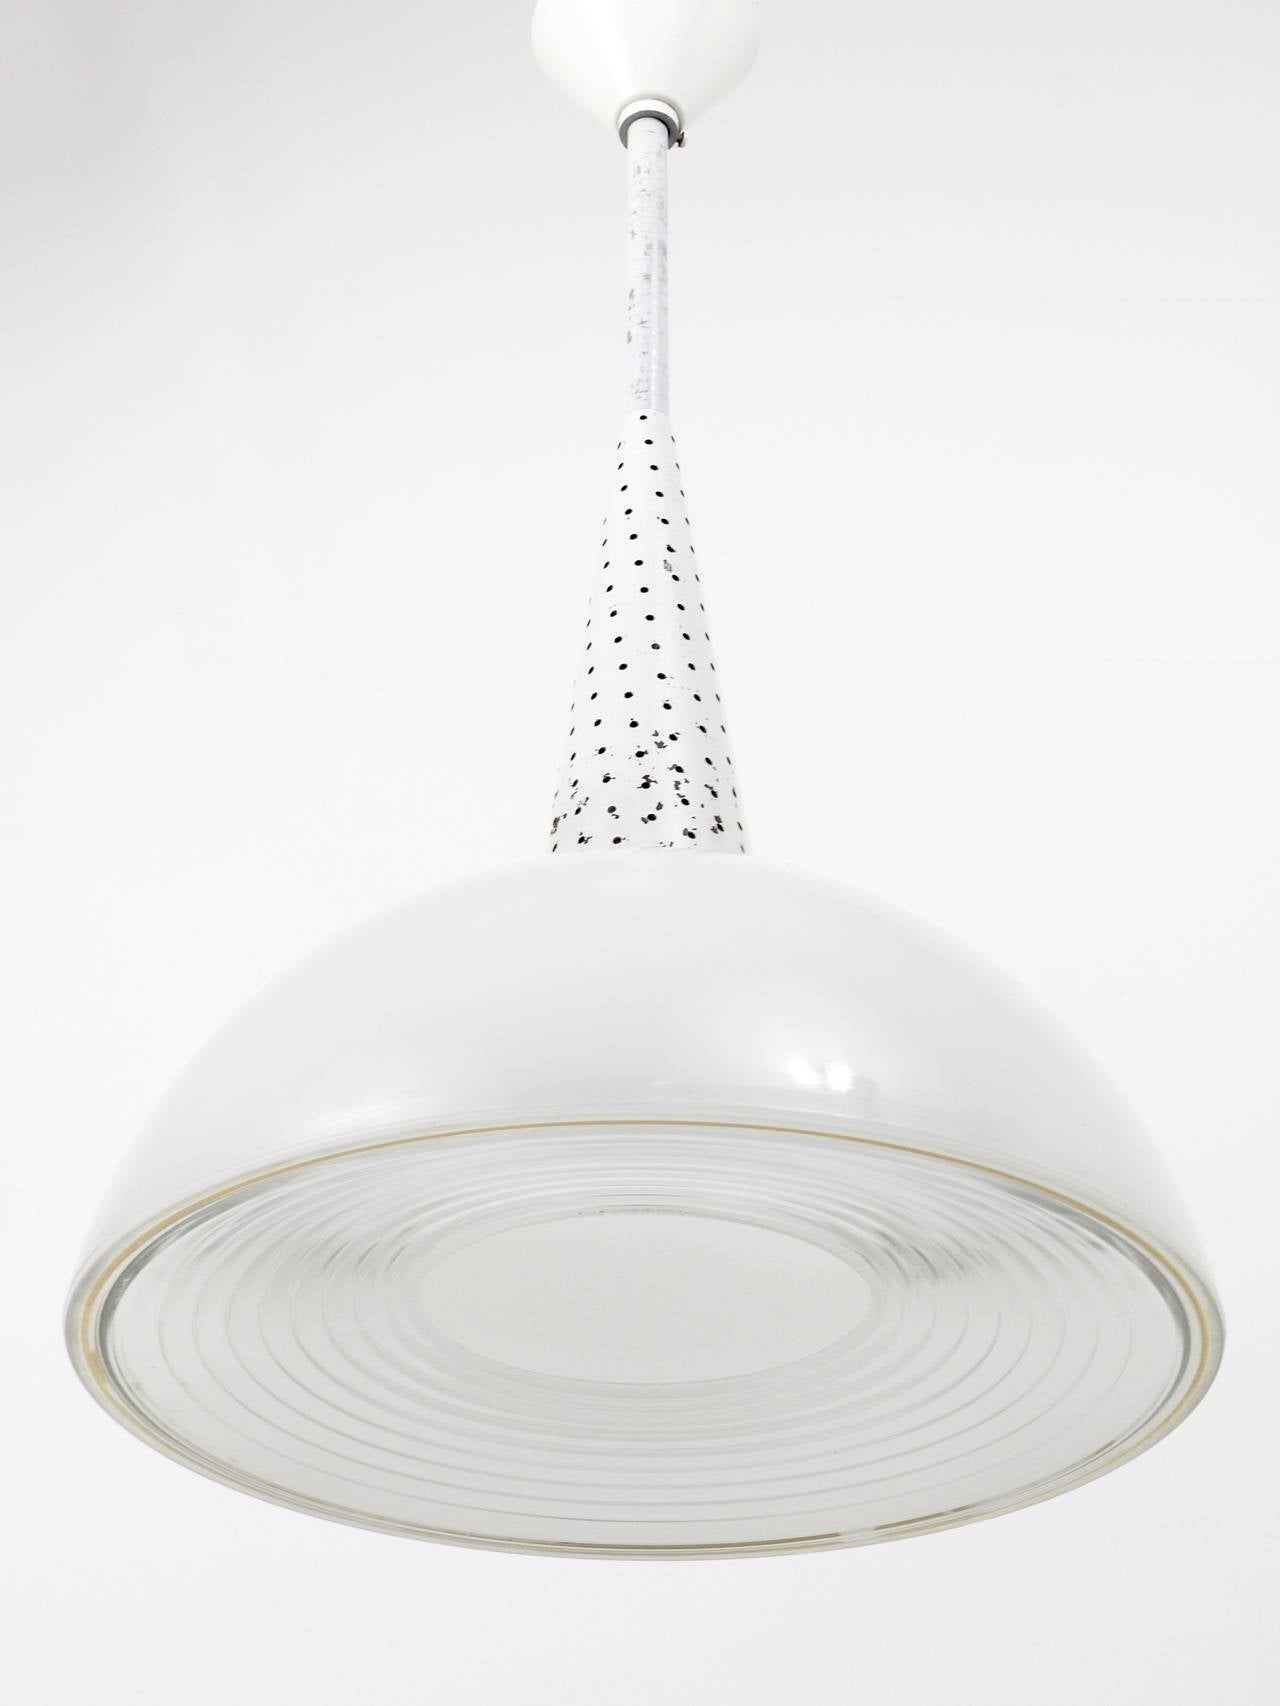 20th Century Mathieu Matégot Perforated Midcentury Pendant Lamp, Holophane, France, 1950s For Sale